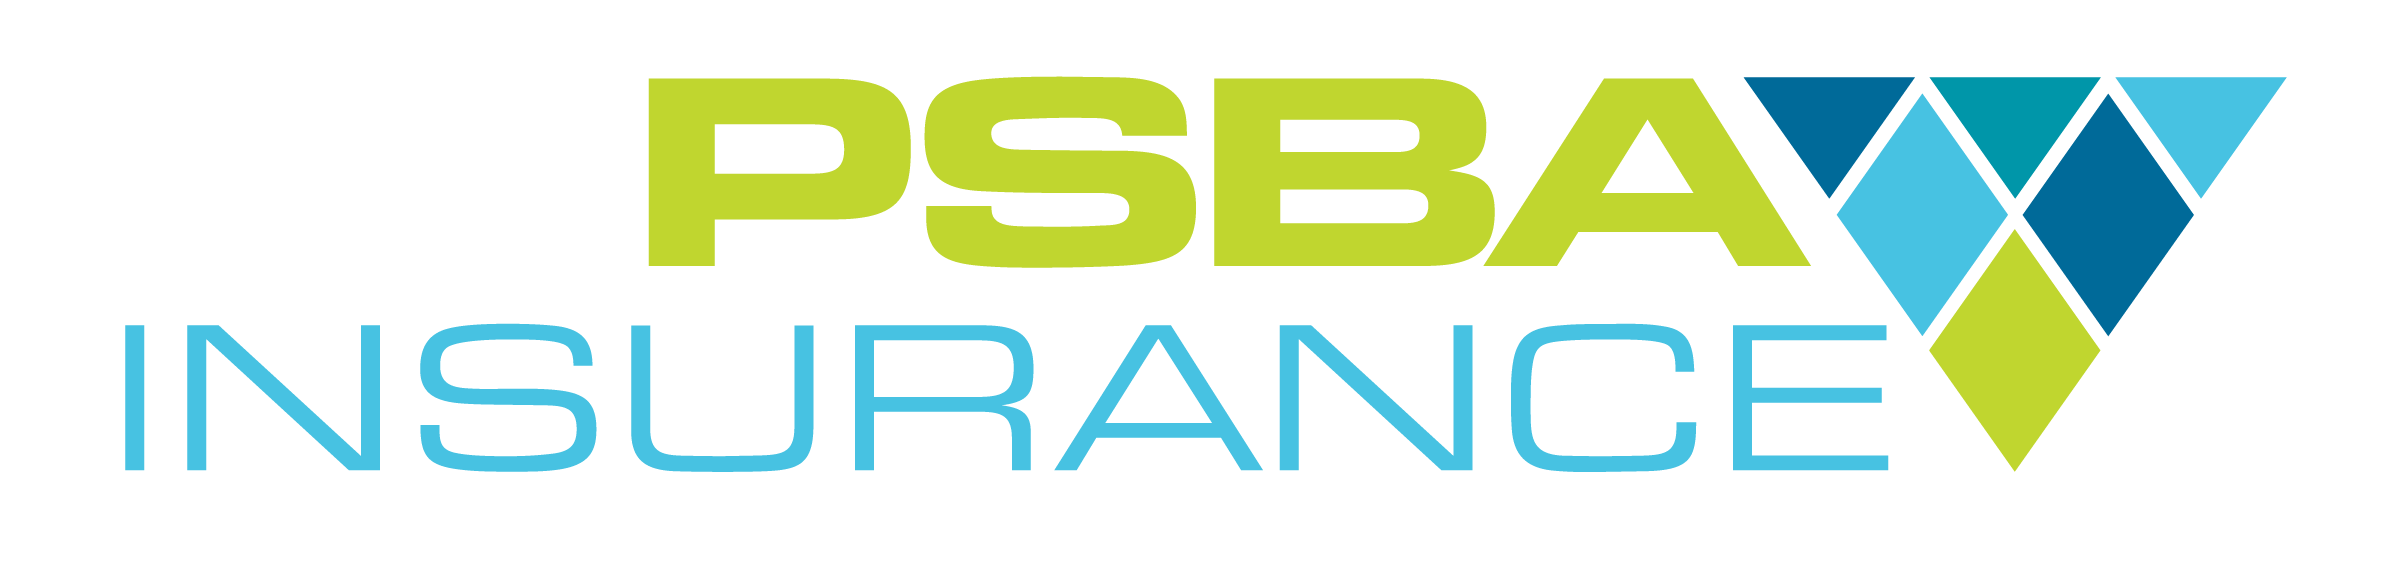 PSBA Insurance logo